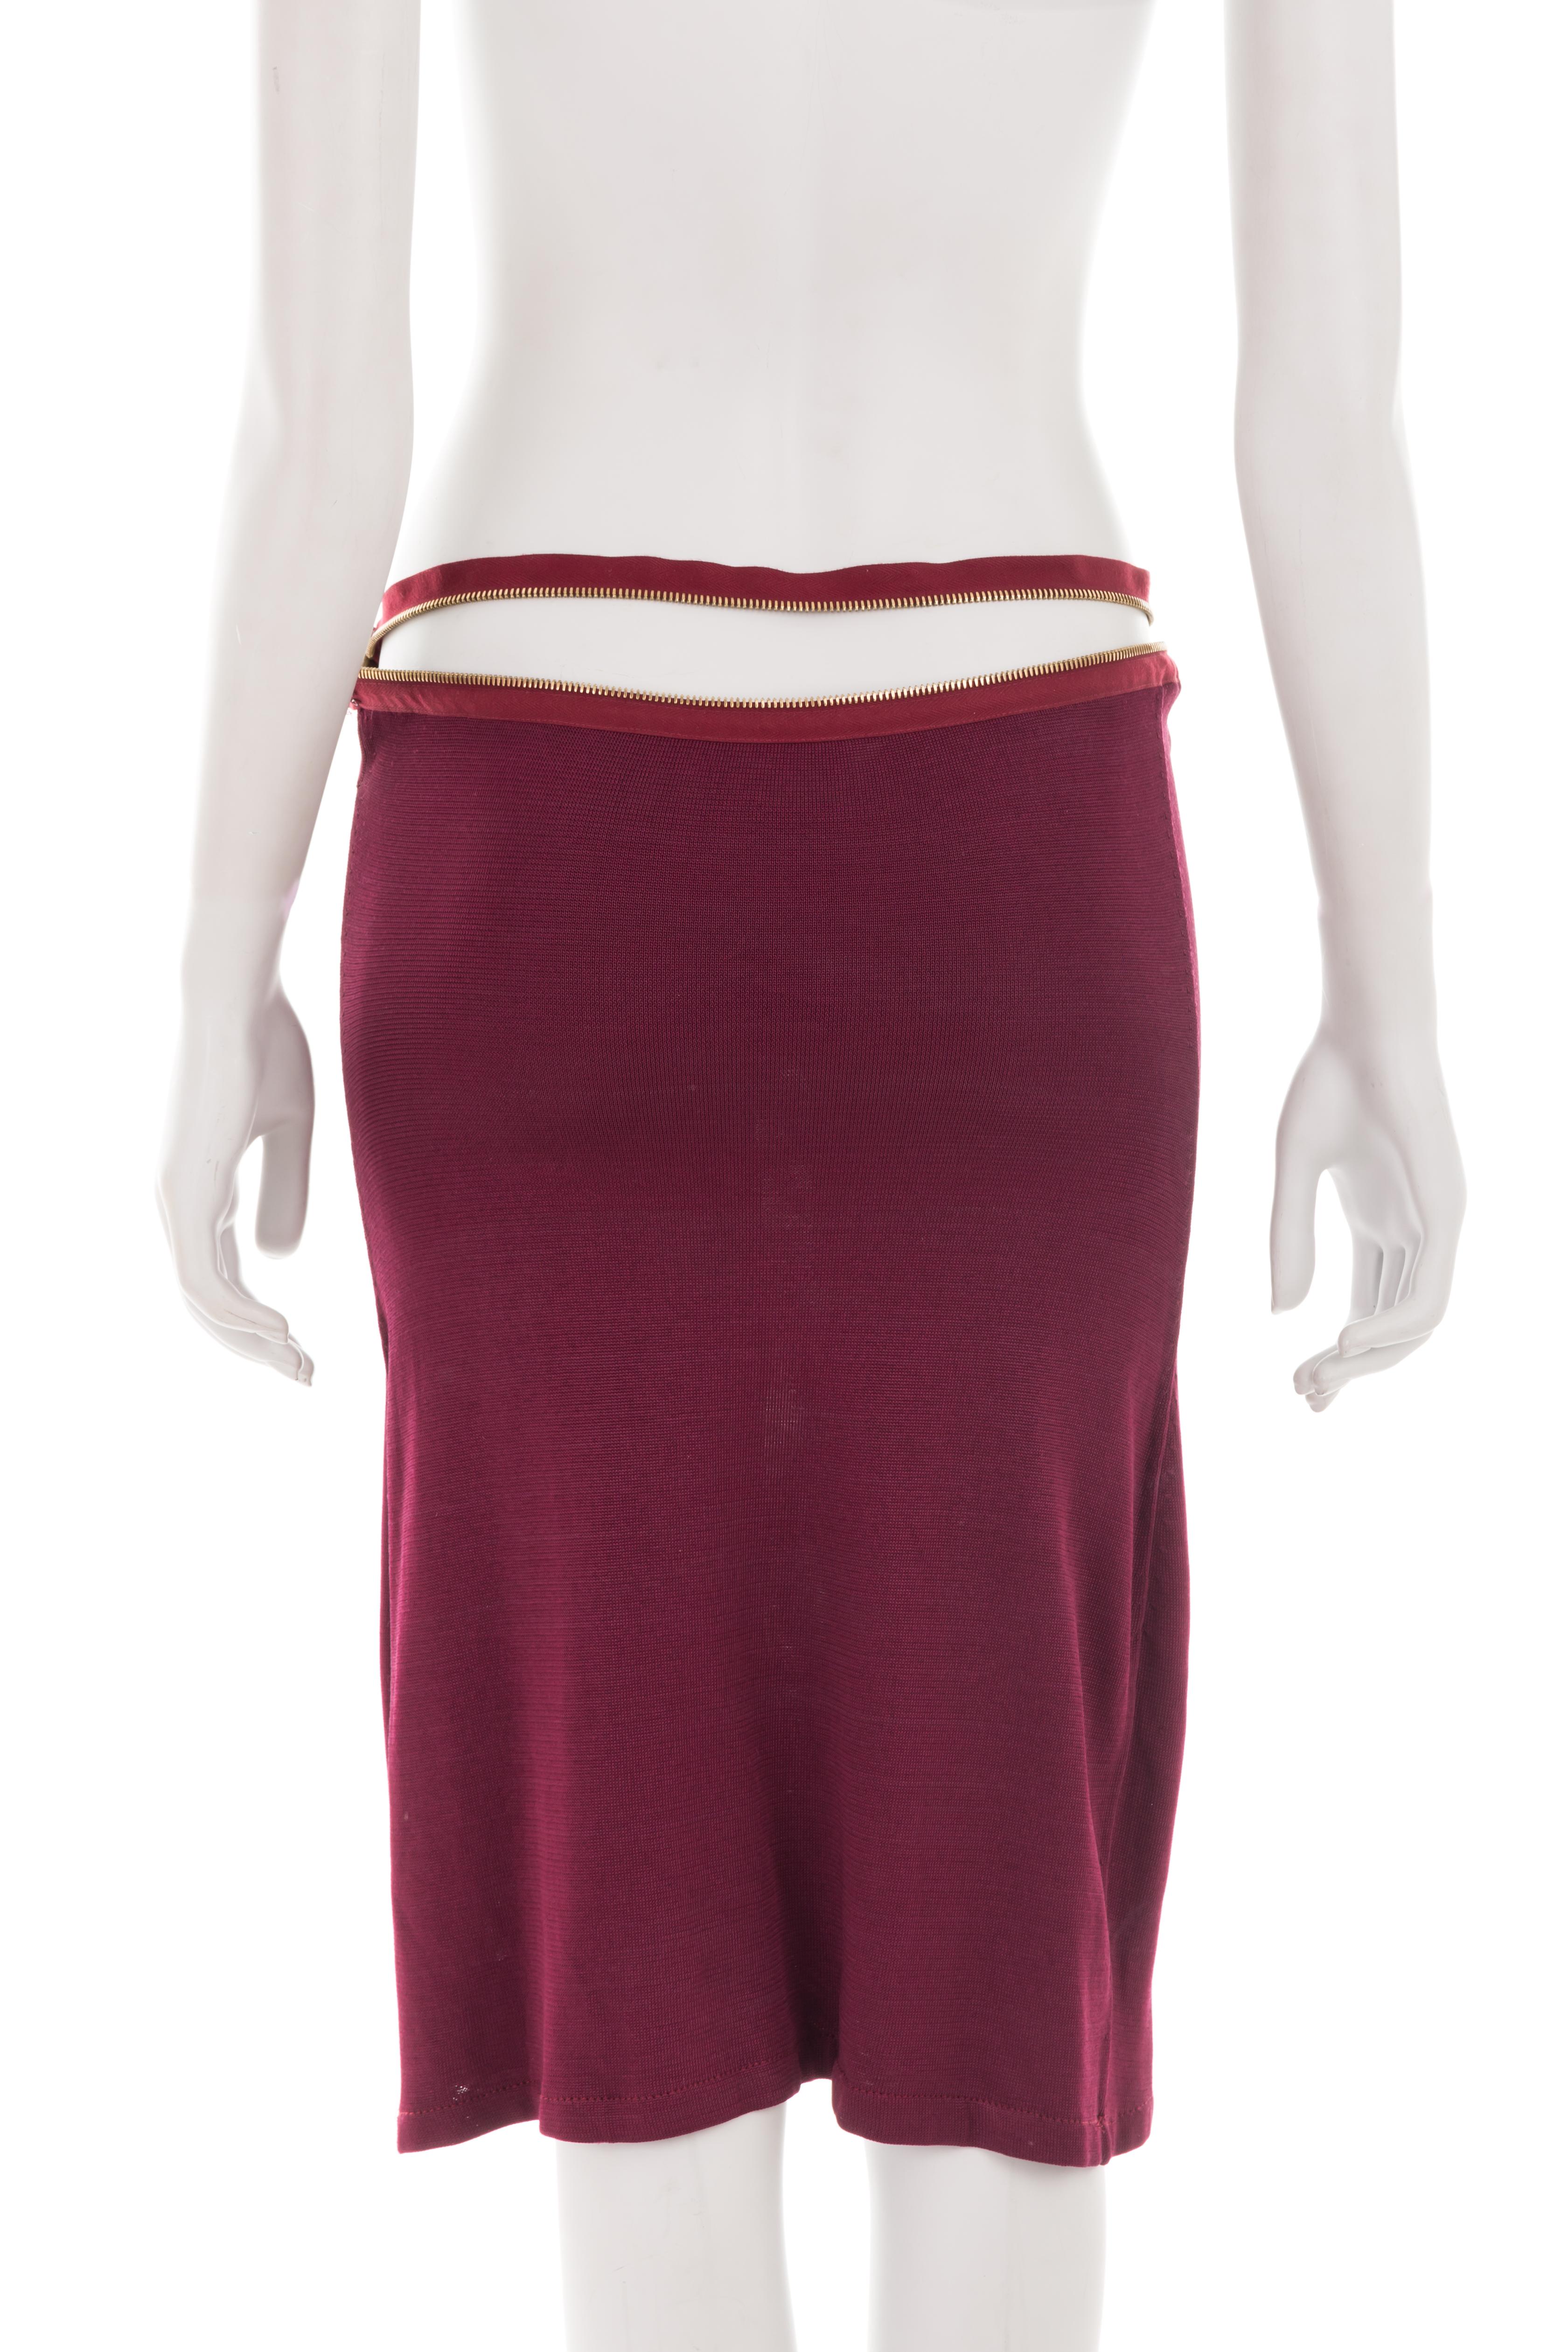 Brown Christian Dior S/S 2001 burgundy midi skirt with asymmetric logo zippers For Sale